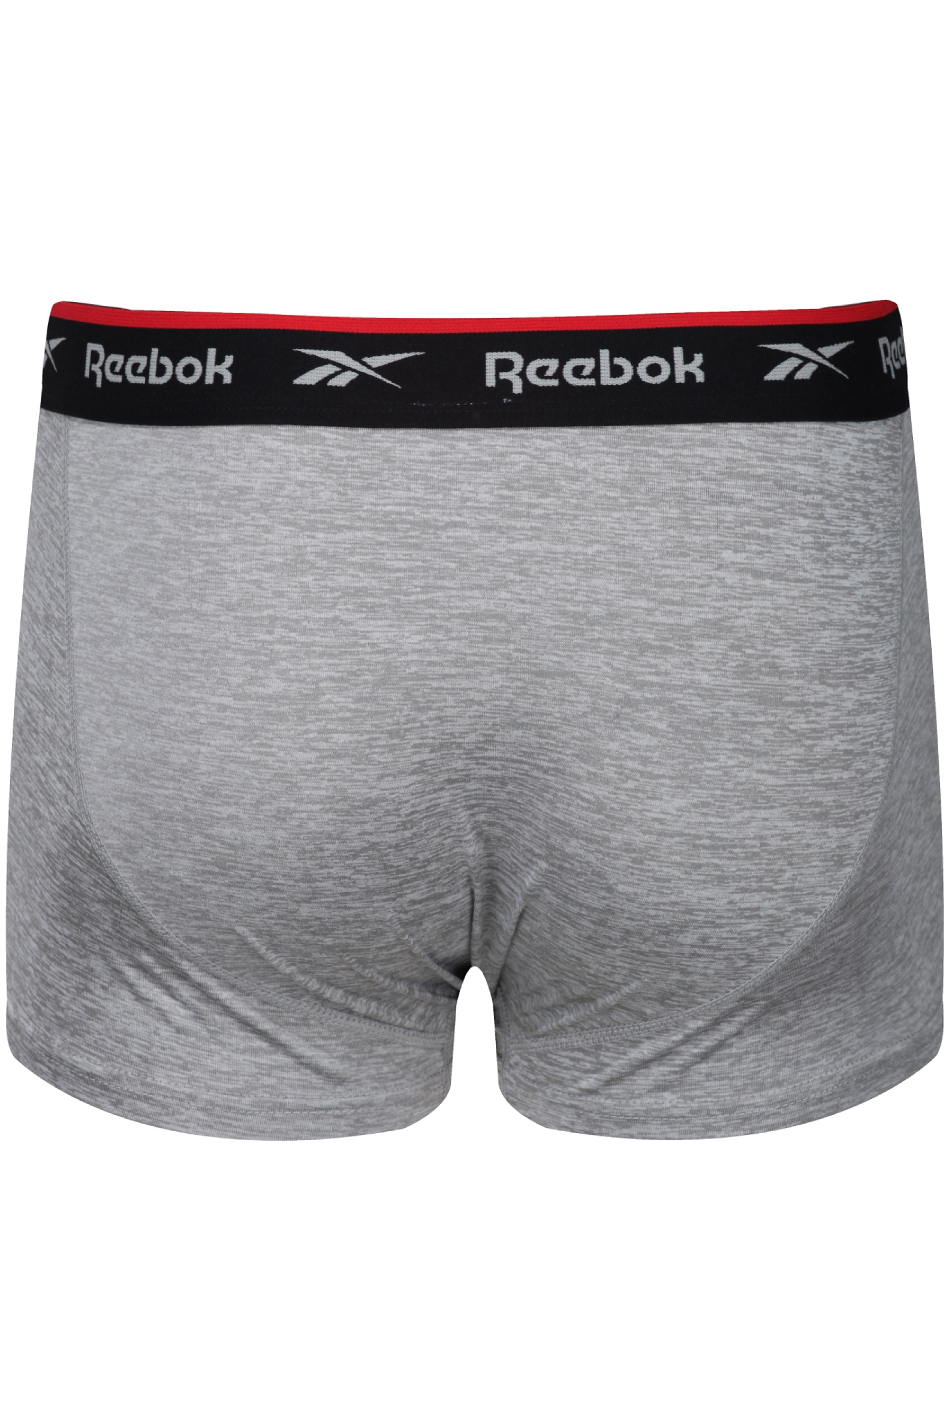 Reebok Redgrave 3 Pack Men's Sport Trunk